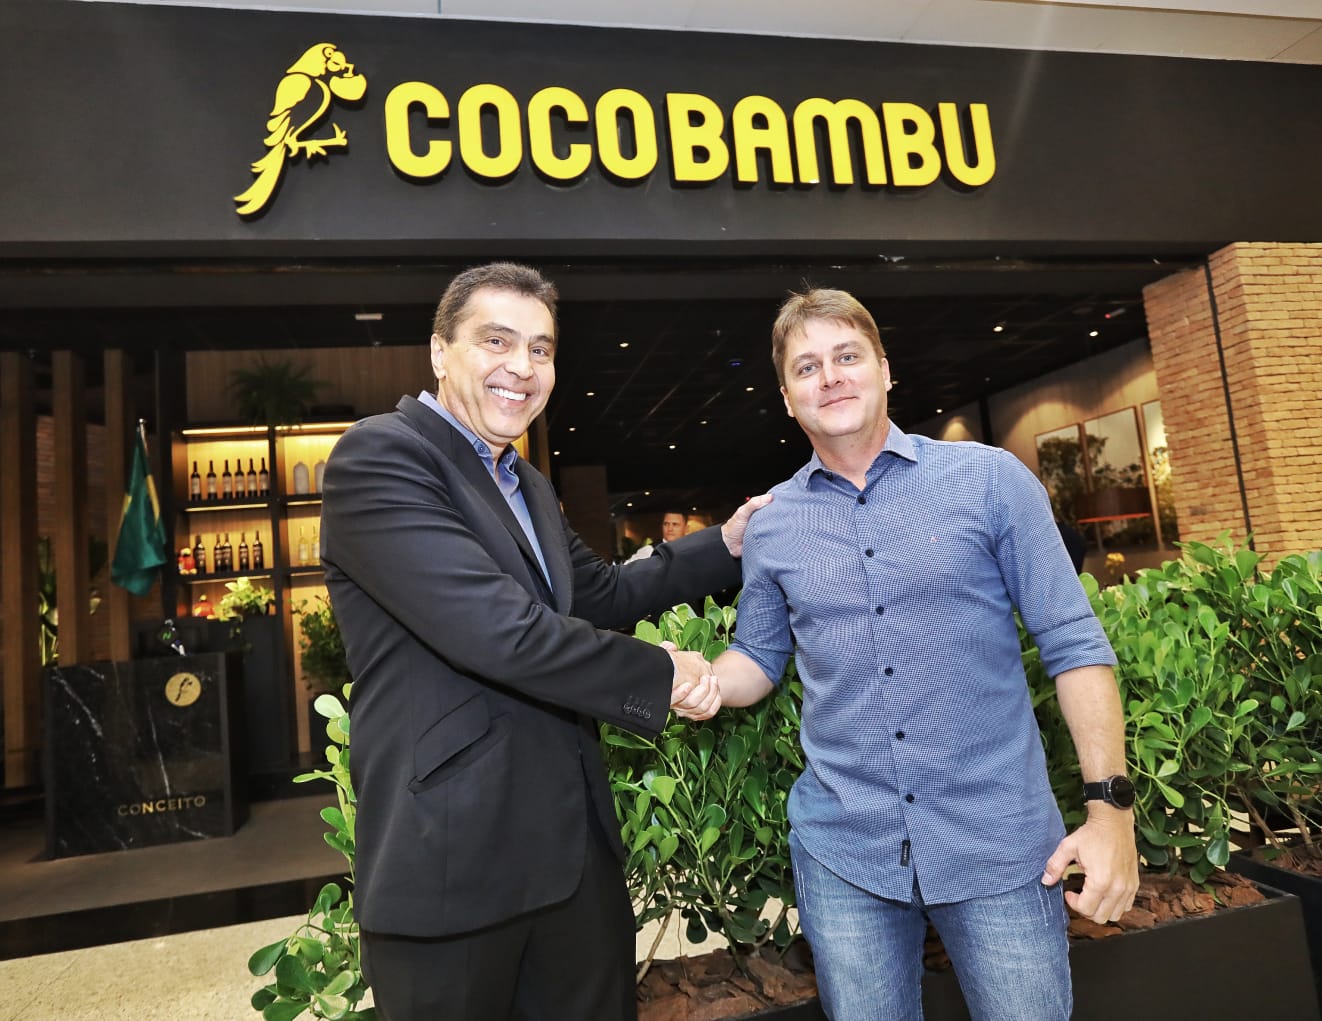 Coco Bambu inaugura unidade no North Shopping Fortaleza nesta segunda-feira (26)